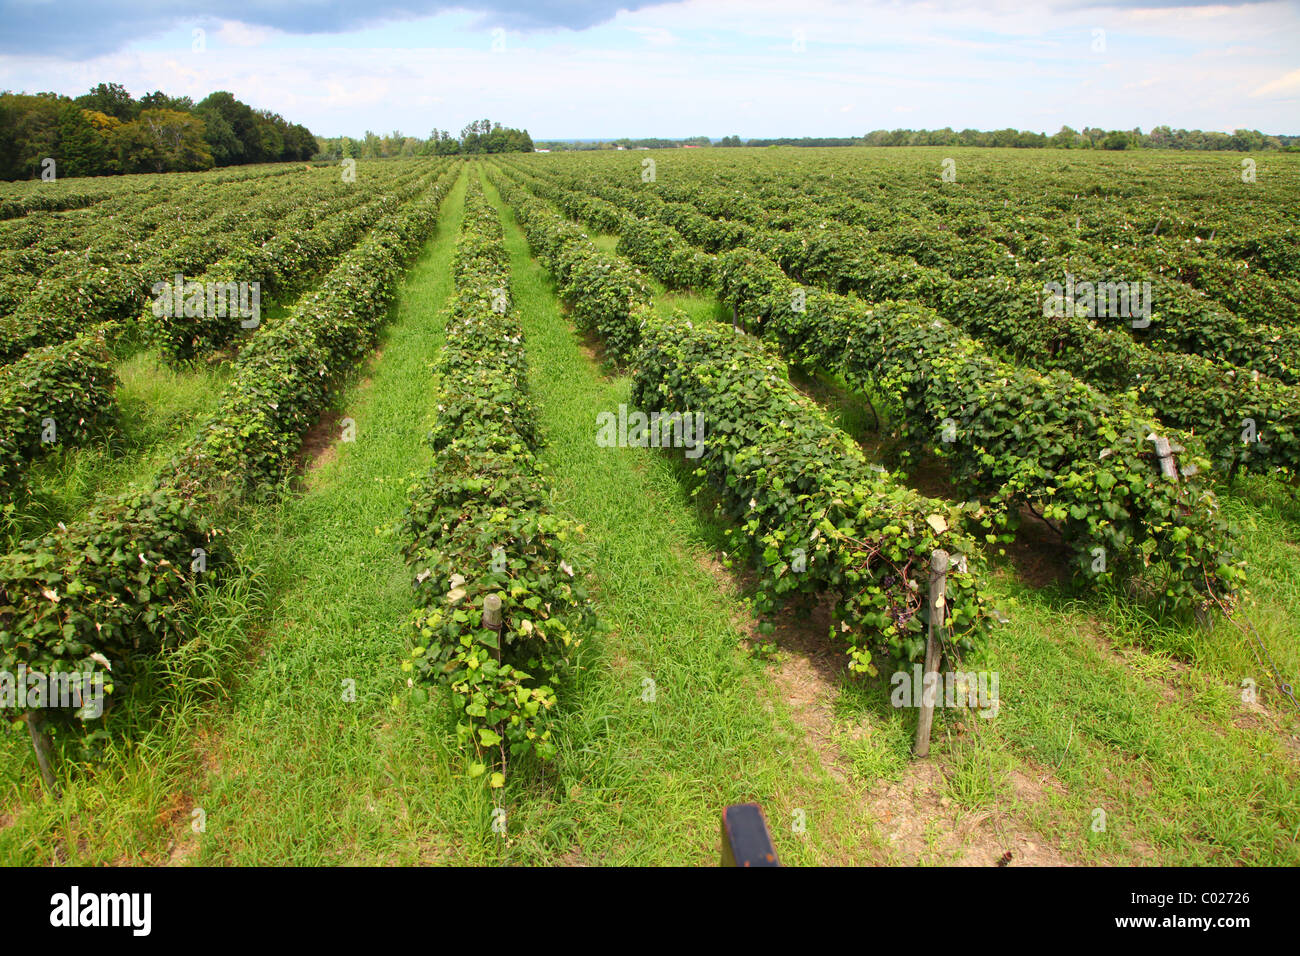 Pennsylvania vineyard Concord grapes on the vine Stock Photo